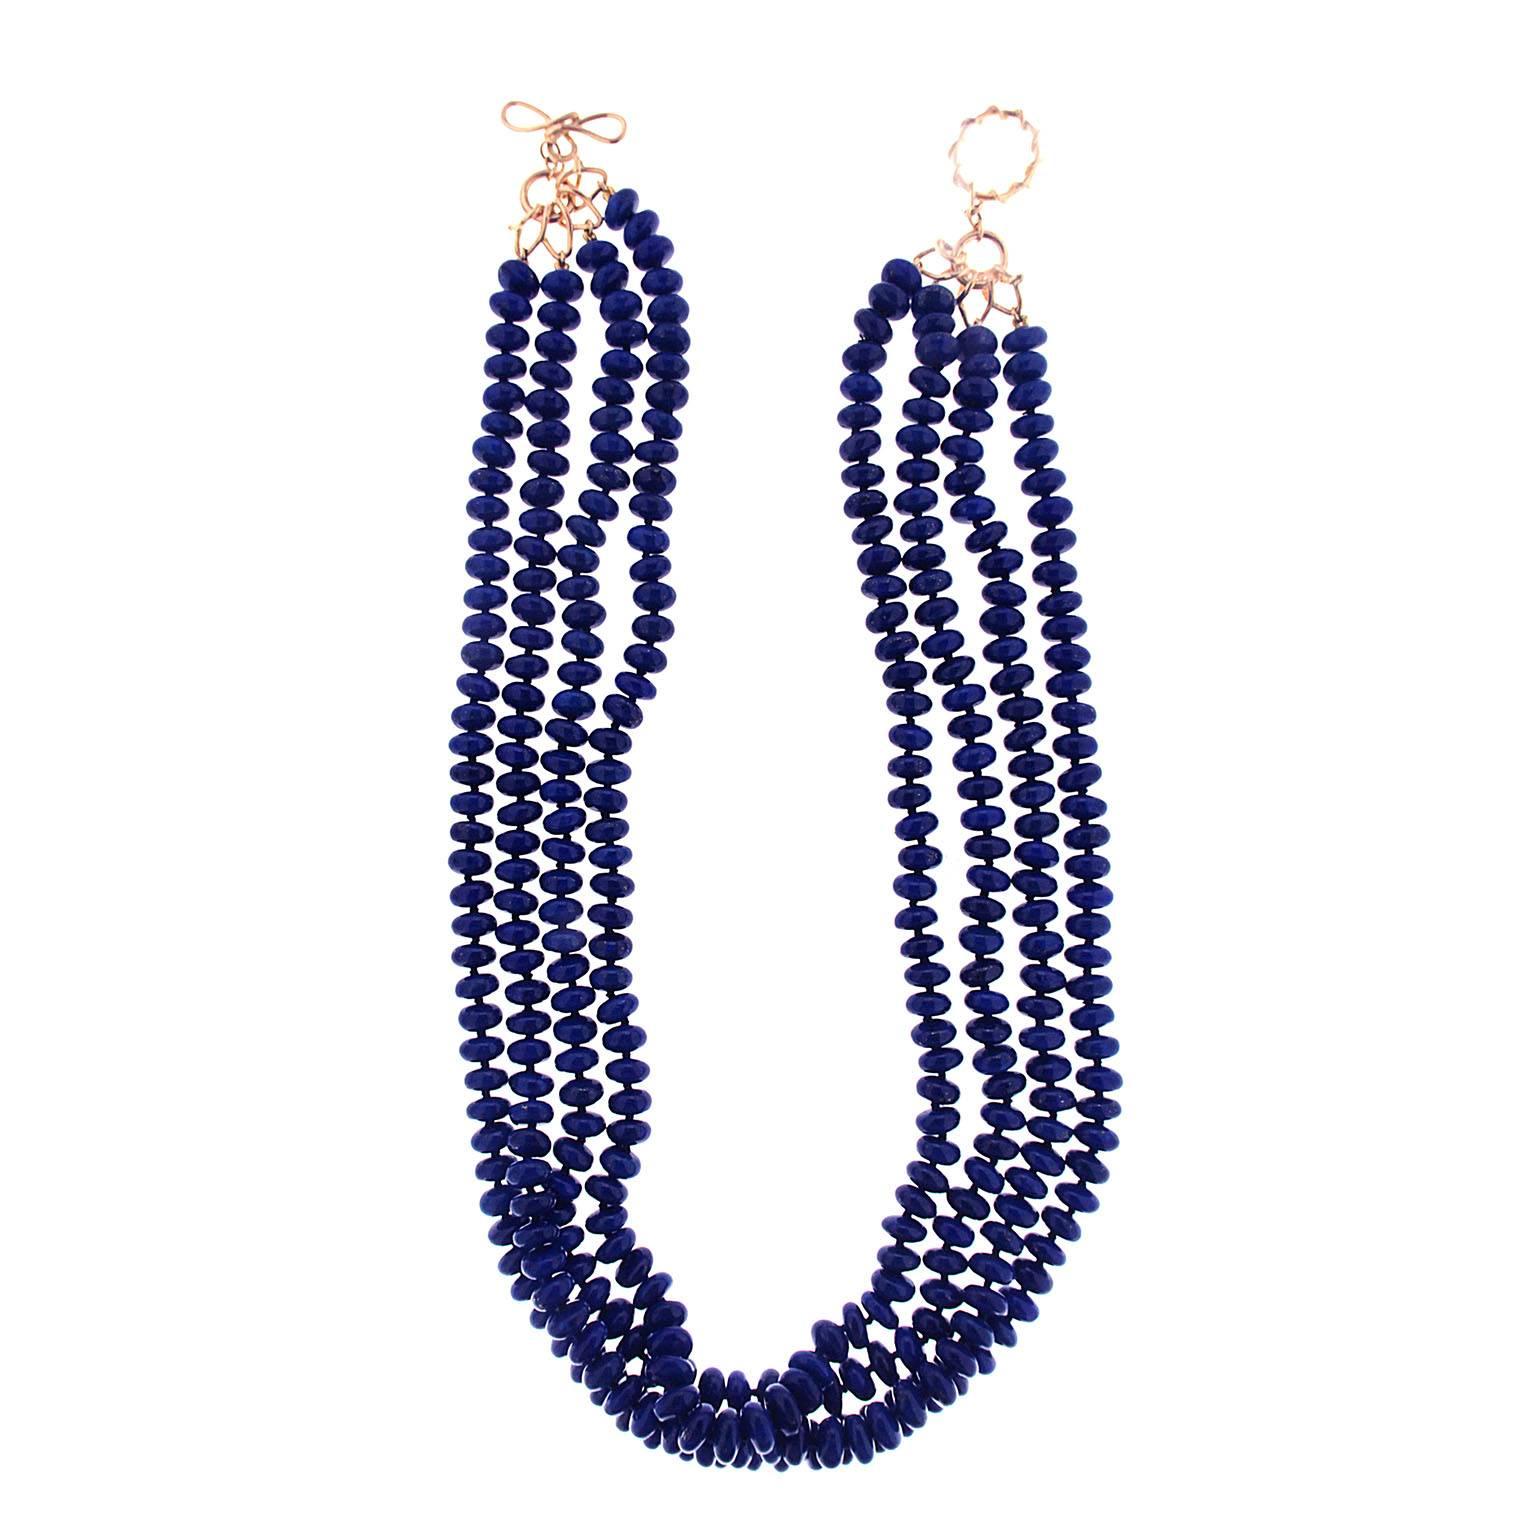 4 Strand Lapis Lazuli Necklace 